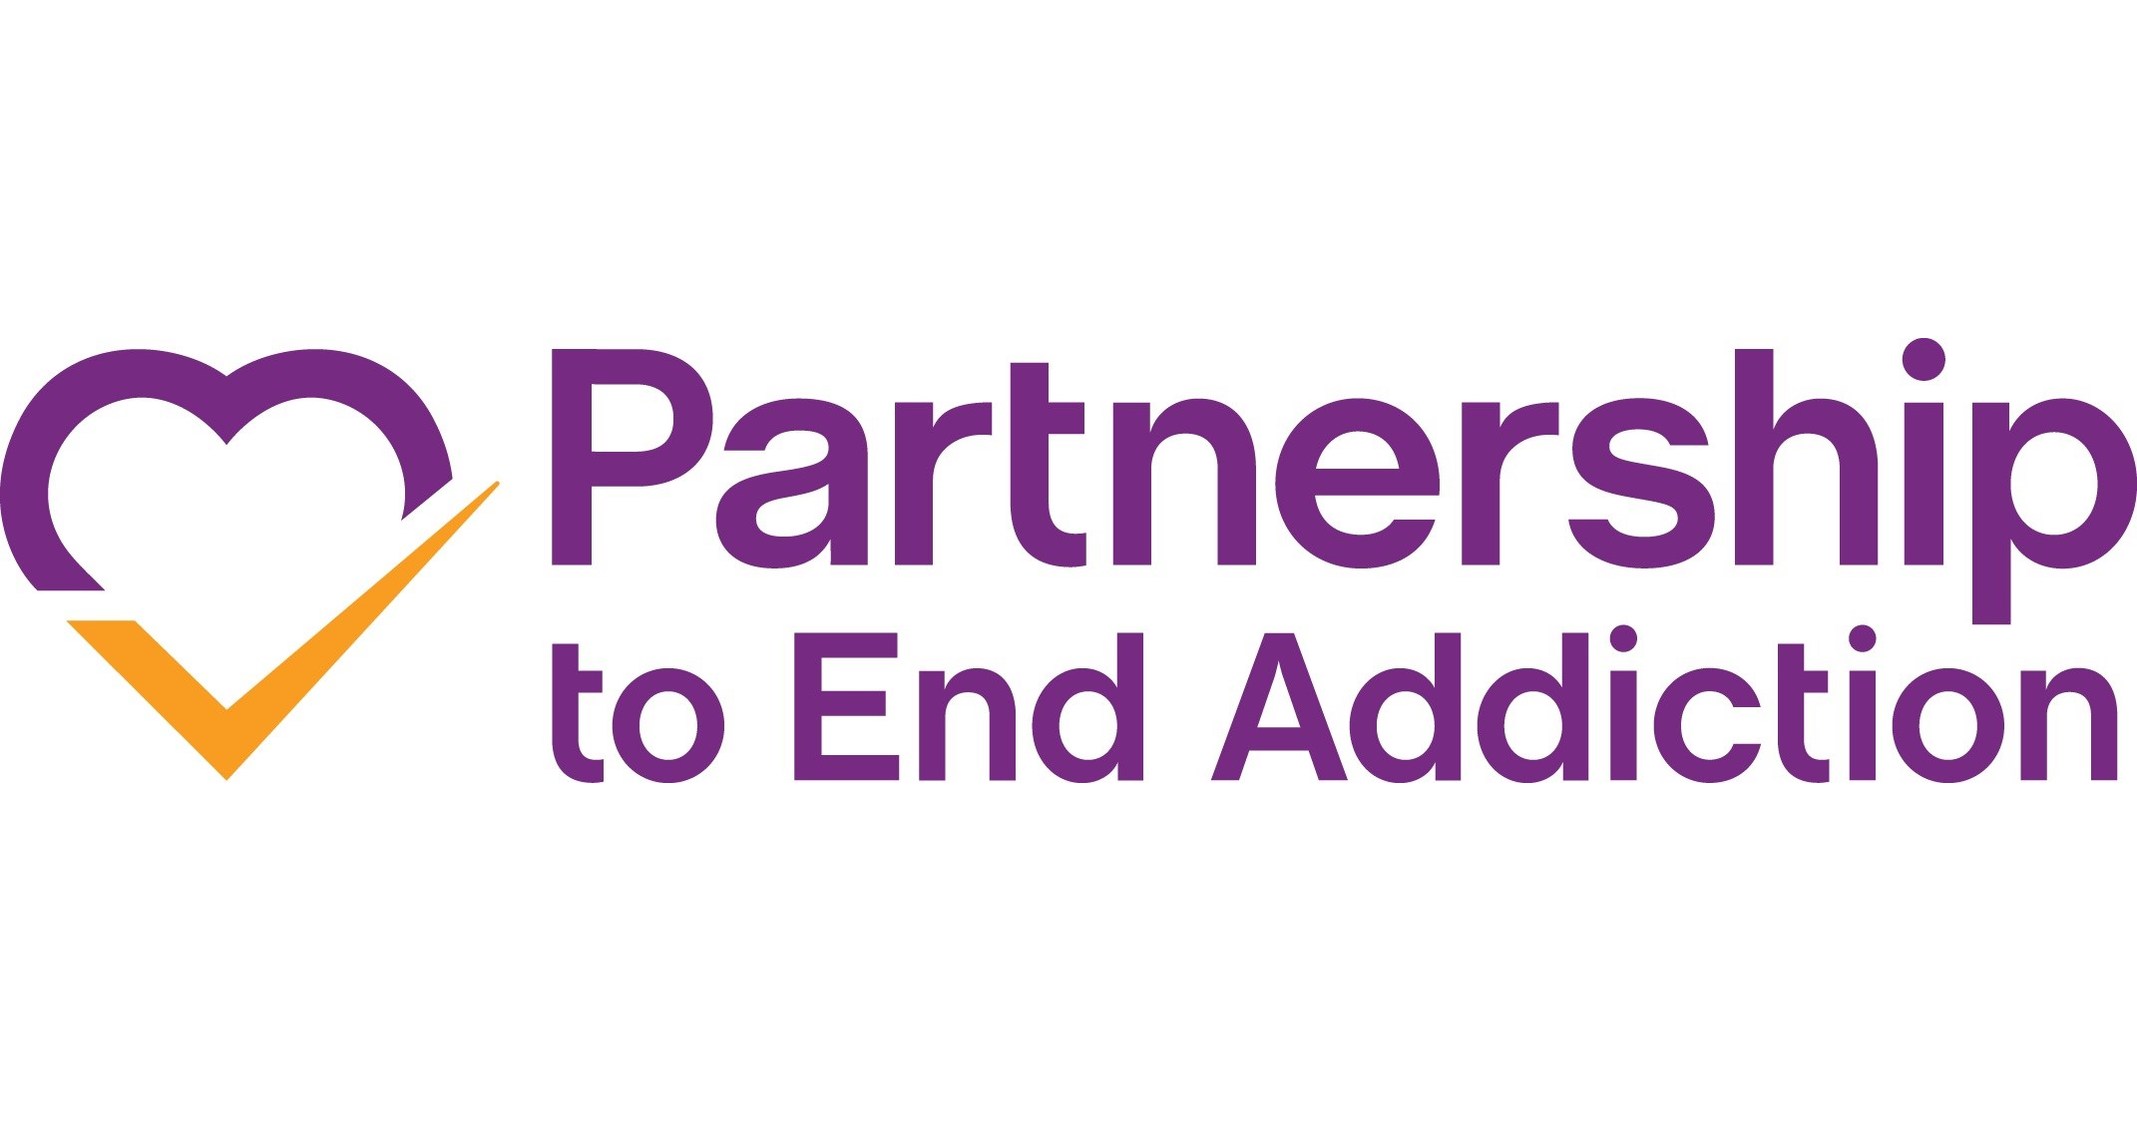 Partnership to End Addiction Logo